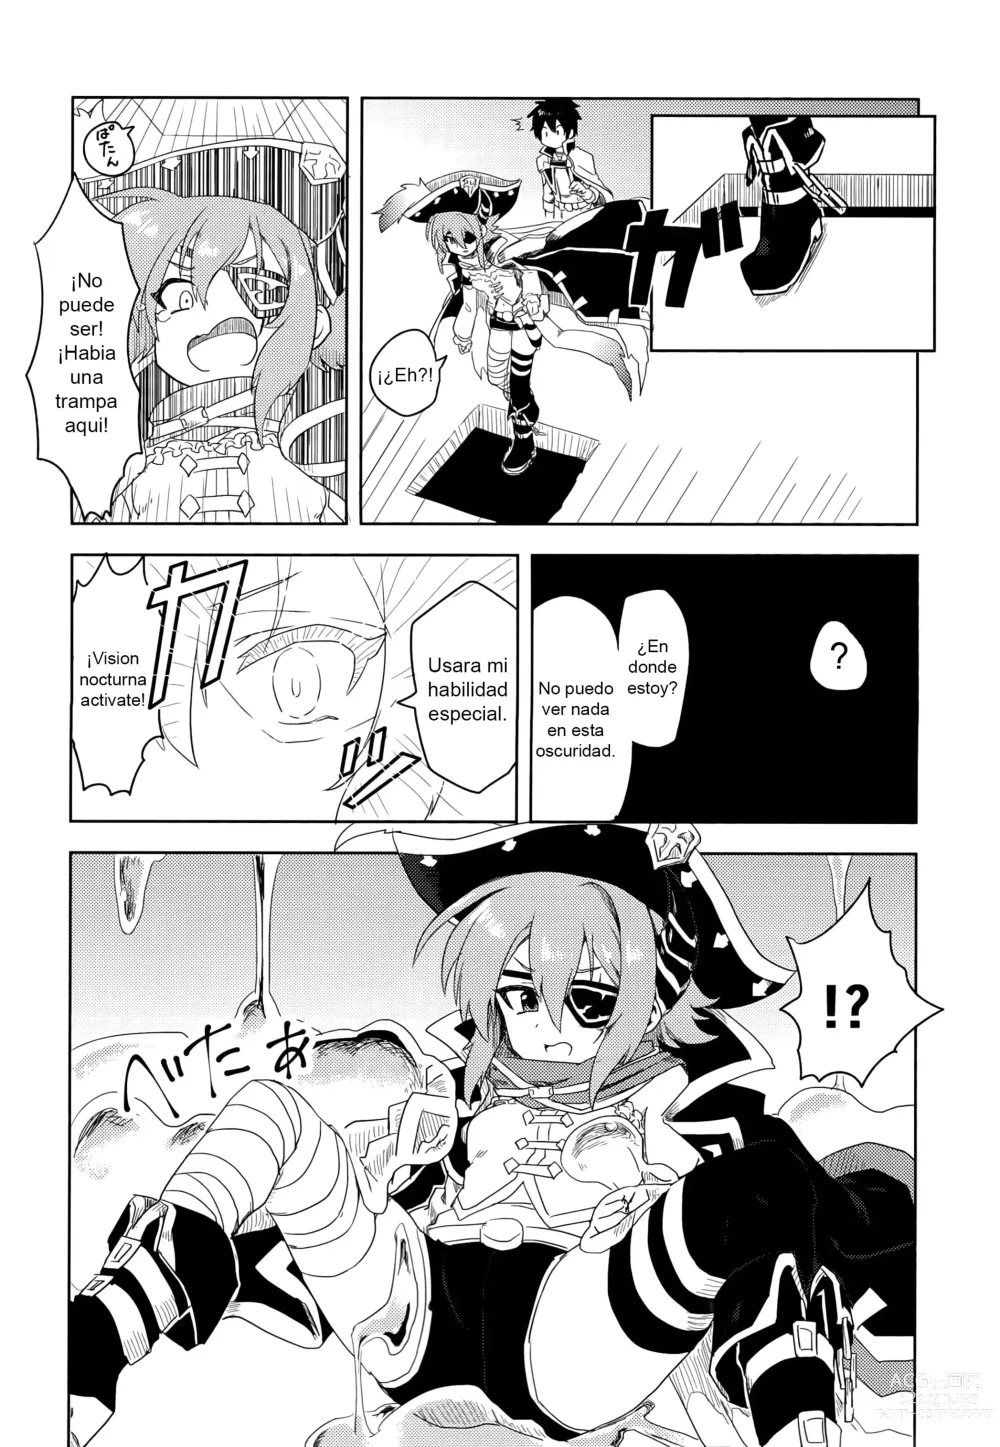 Page 3 of doujinshi Anna-chan to Ero Trap Dungeon